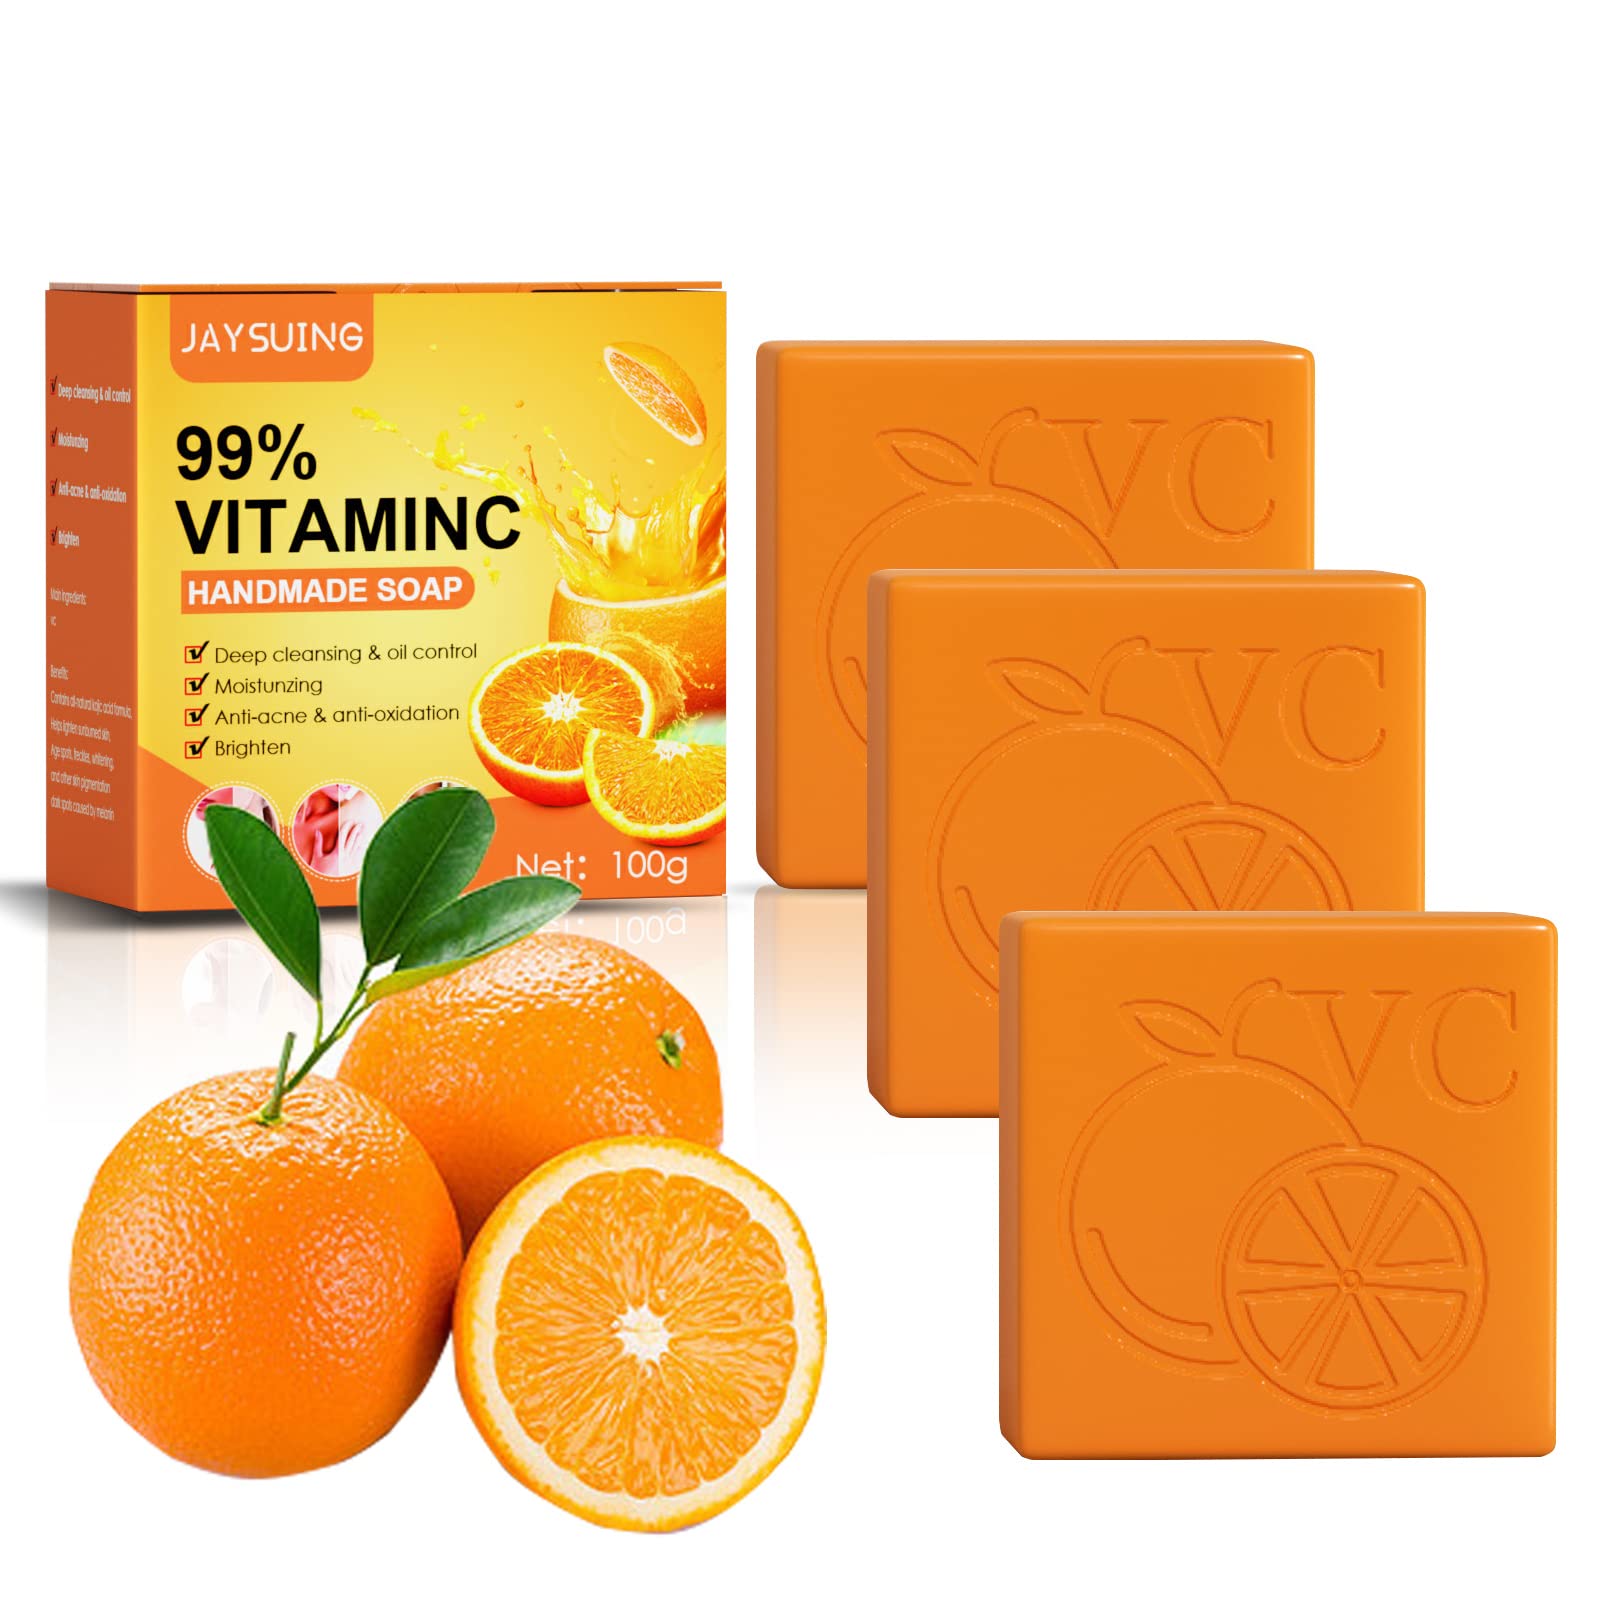 Pureadee 3PCS Elements Vitamin C Soap, Orange Vitamin C Handmade Soap, Natural Organic Soap with 99% Vitamin C, Face & Body Exfoliate Moisturizing Carefor Deeply Cleanses and Nourishes Skin